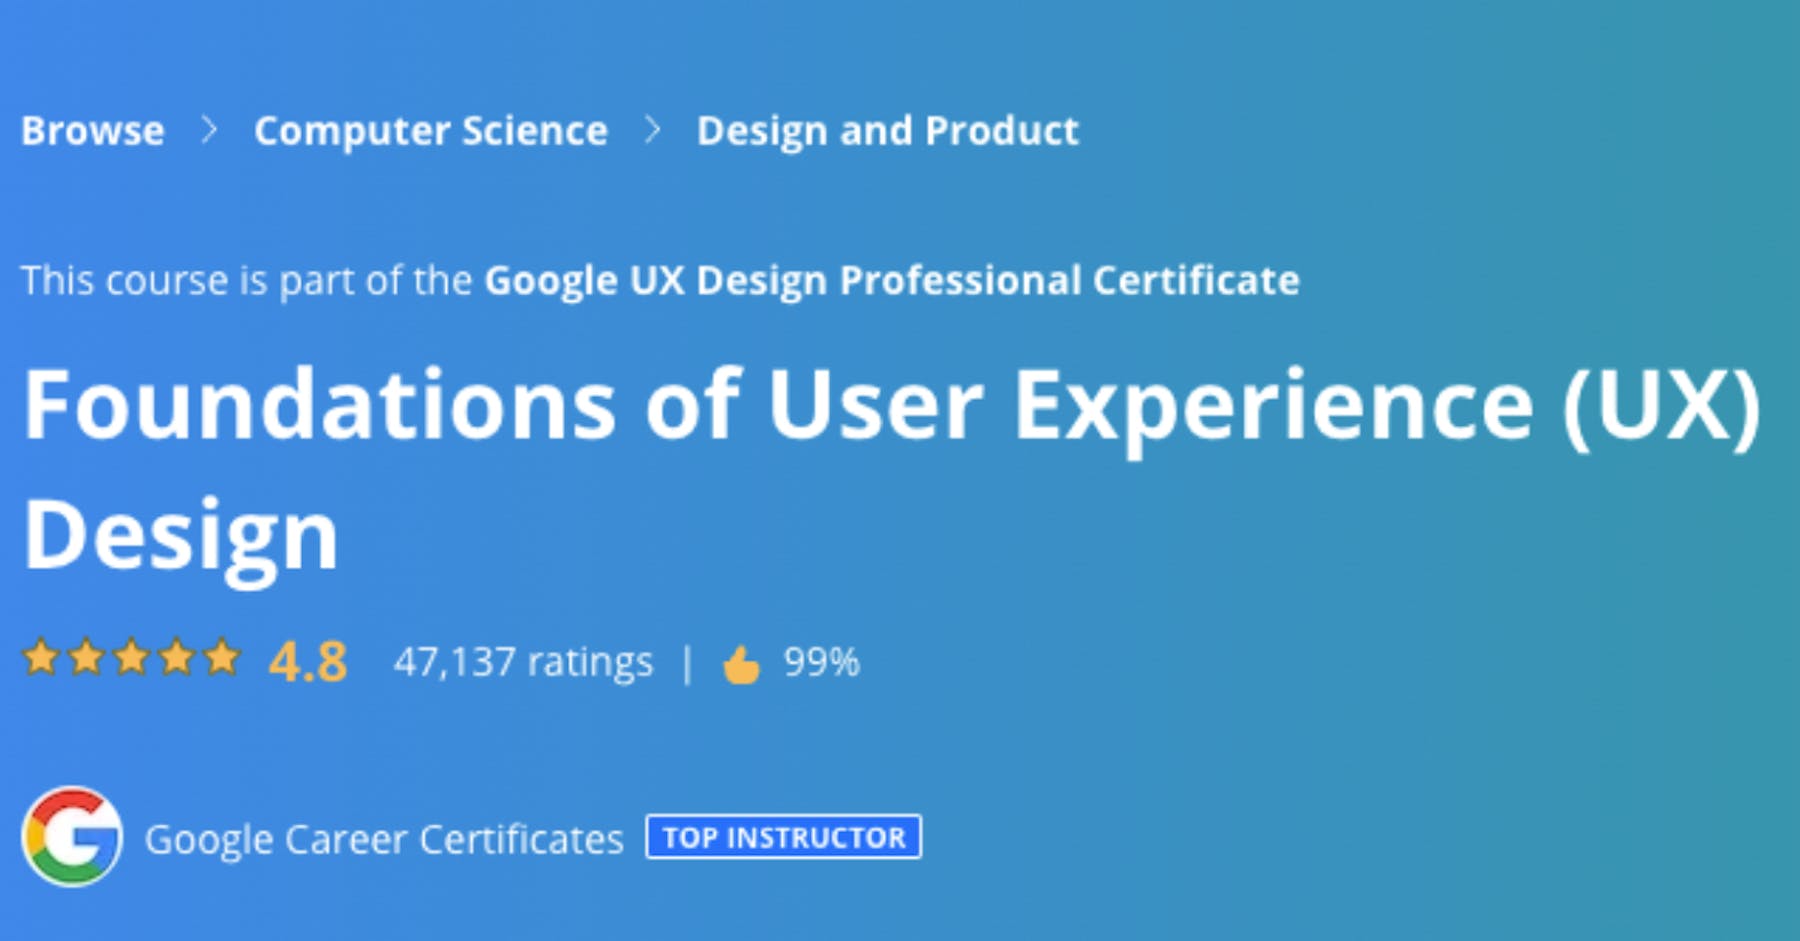 Google's UX design certificate training